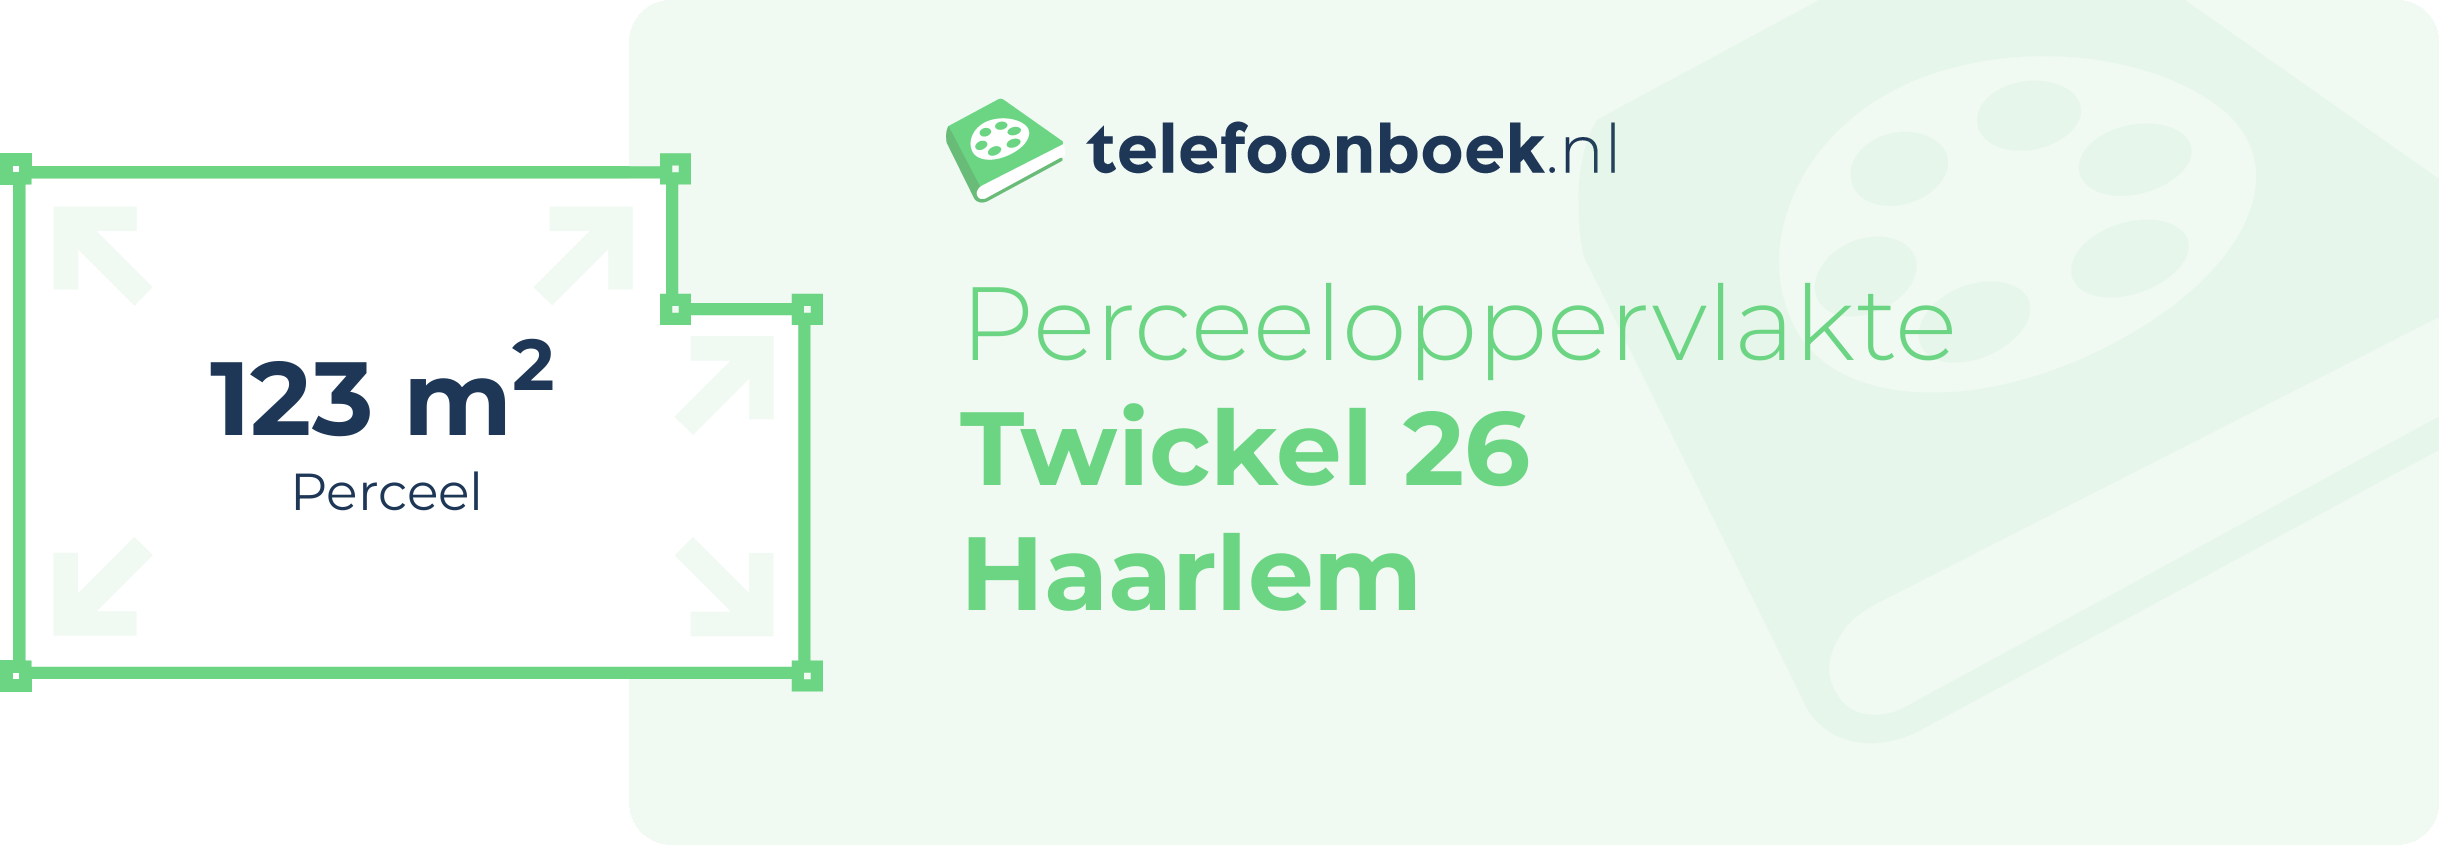 Perceeloppervlakte Twickel 26 Haarlem